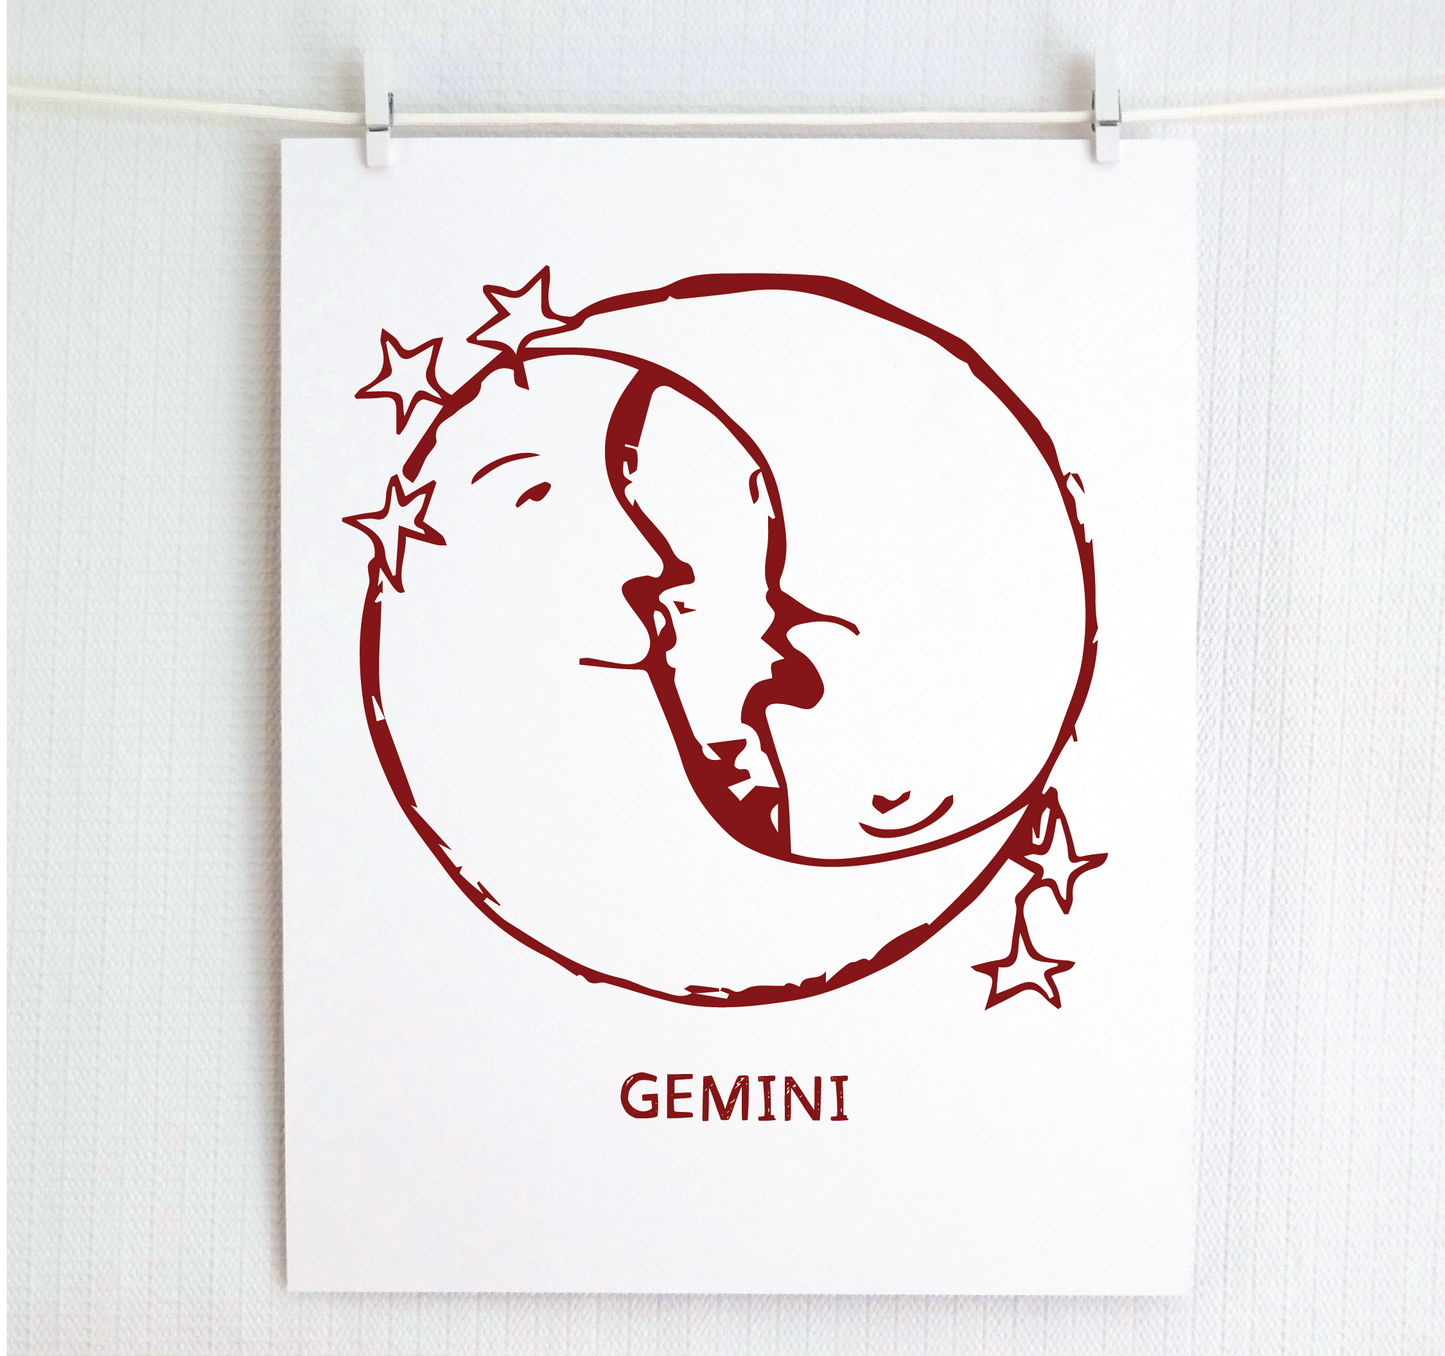 Signs of the Zodiac: GEMINI